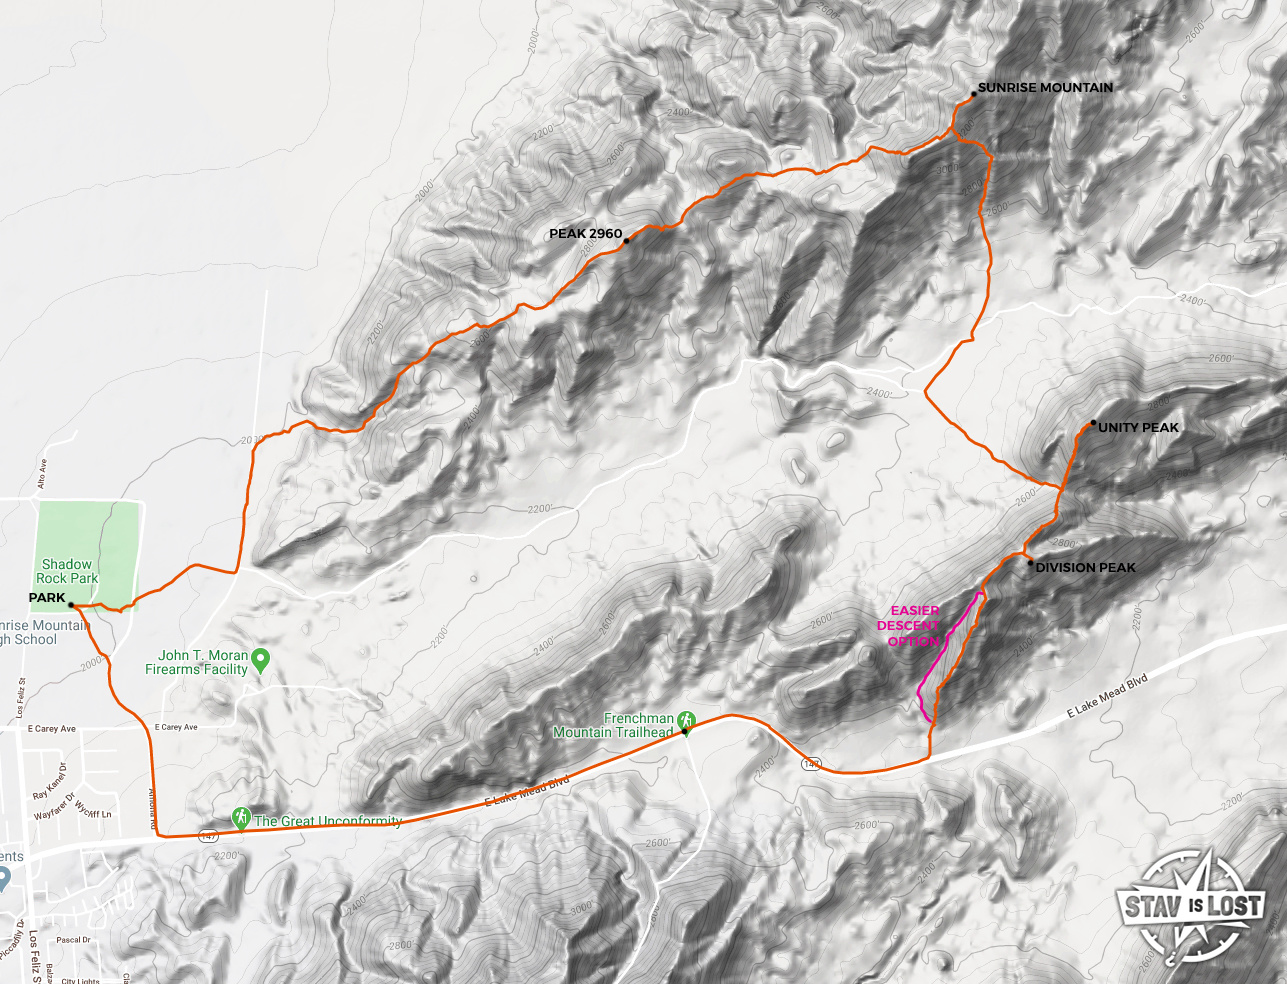 map for Sunrise Mountain, Unity Peak, Division Peak Loop by stav is lost